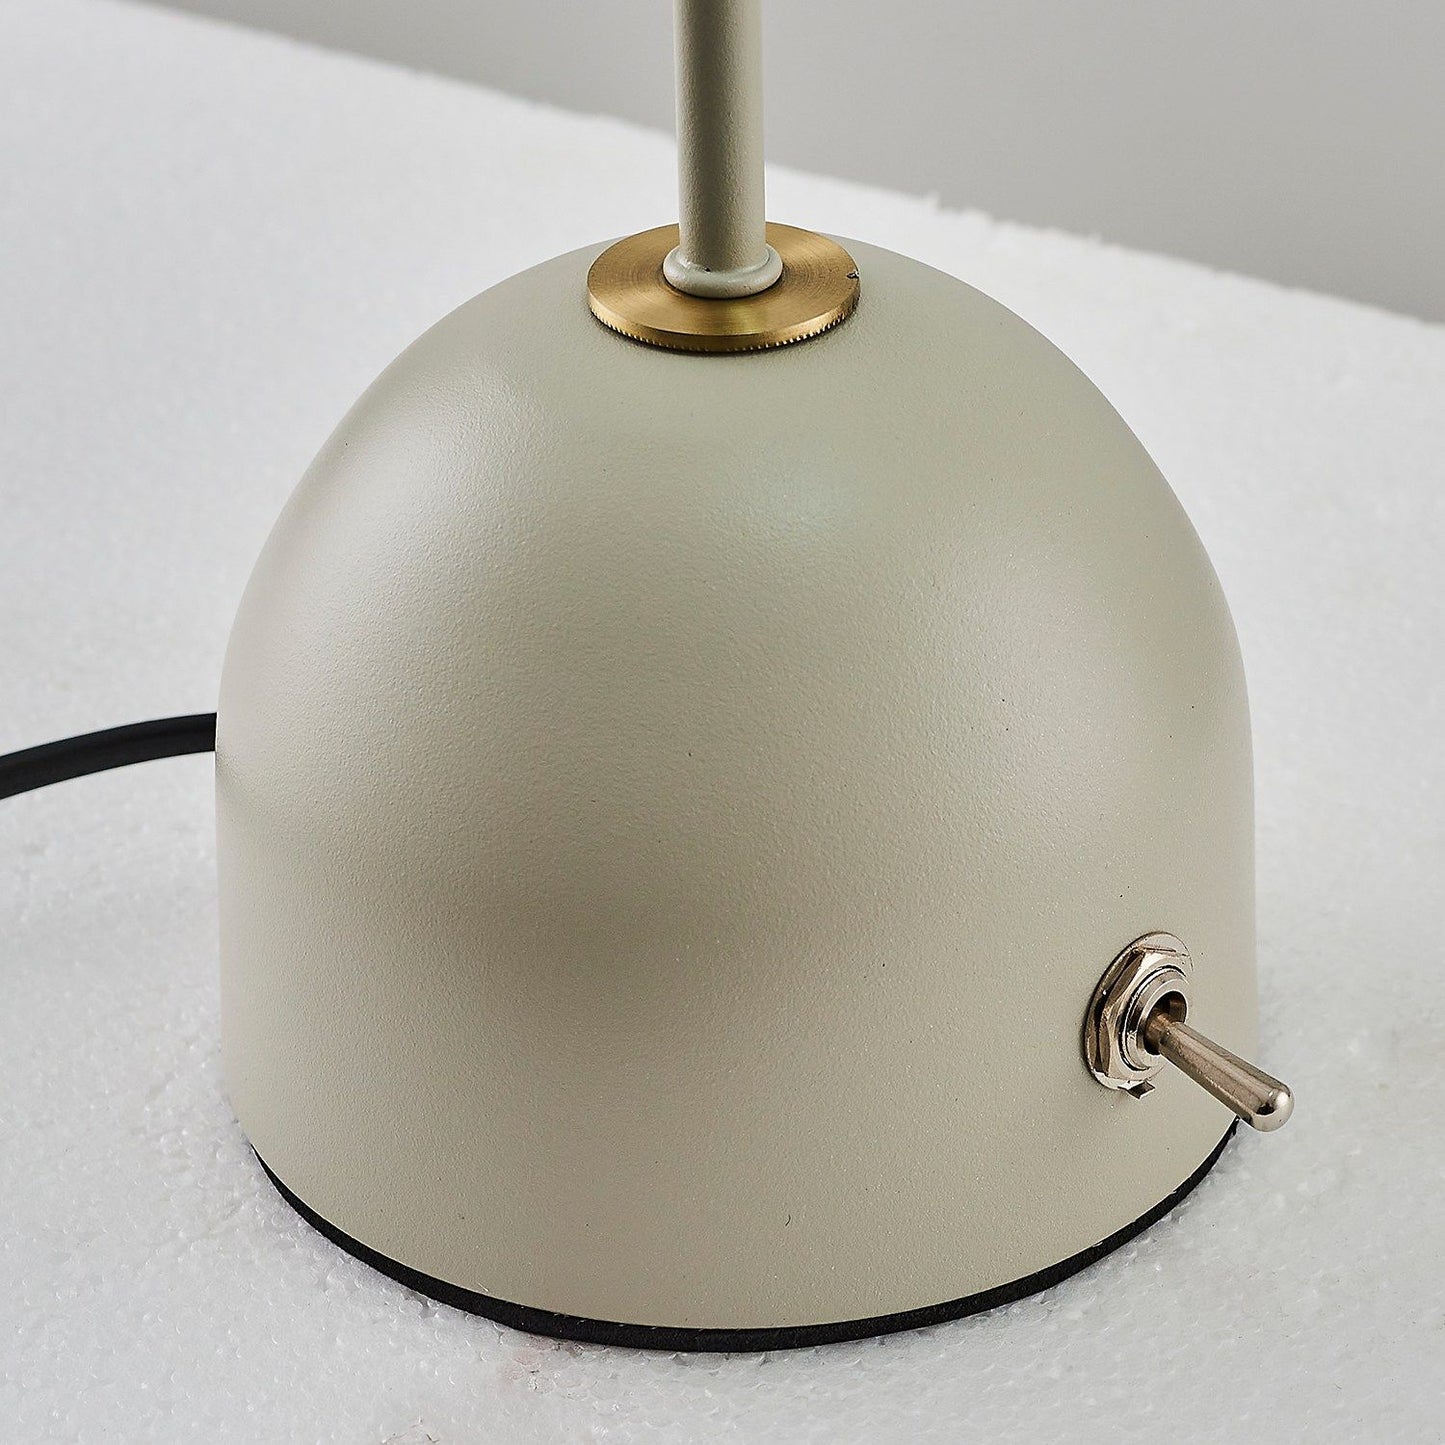 Niso - 103-19-01 - Table Lamp